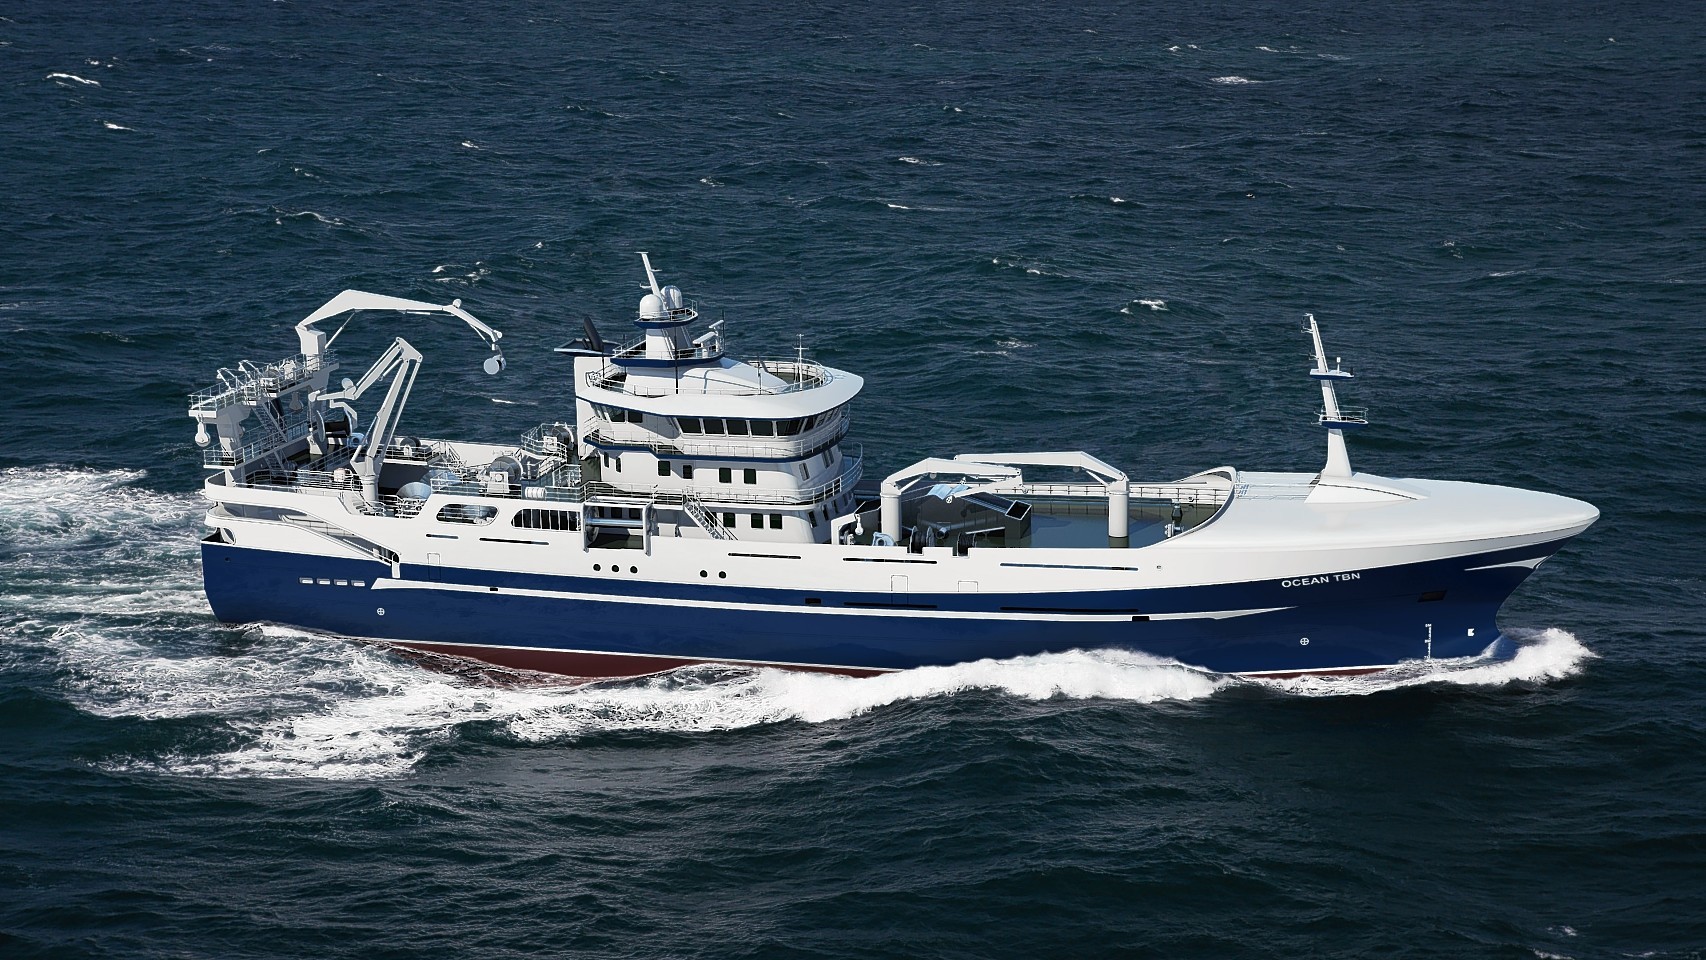 The new trawler is designed and powered by Wärtsilä